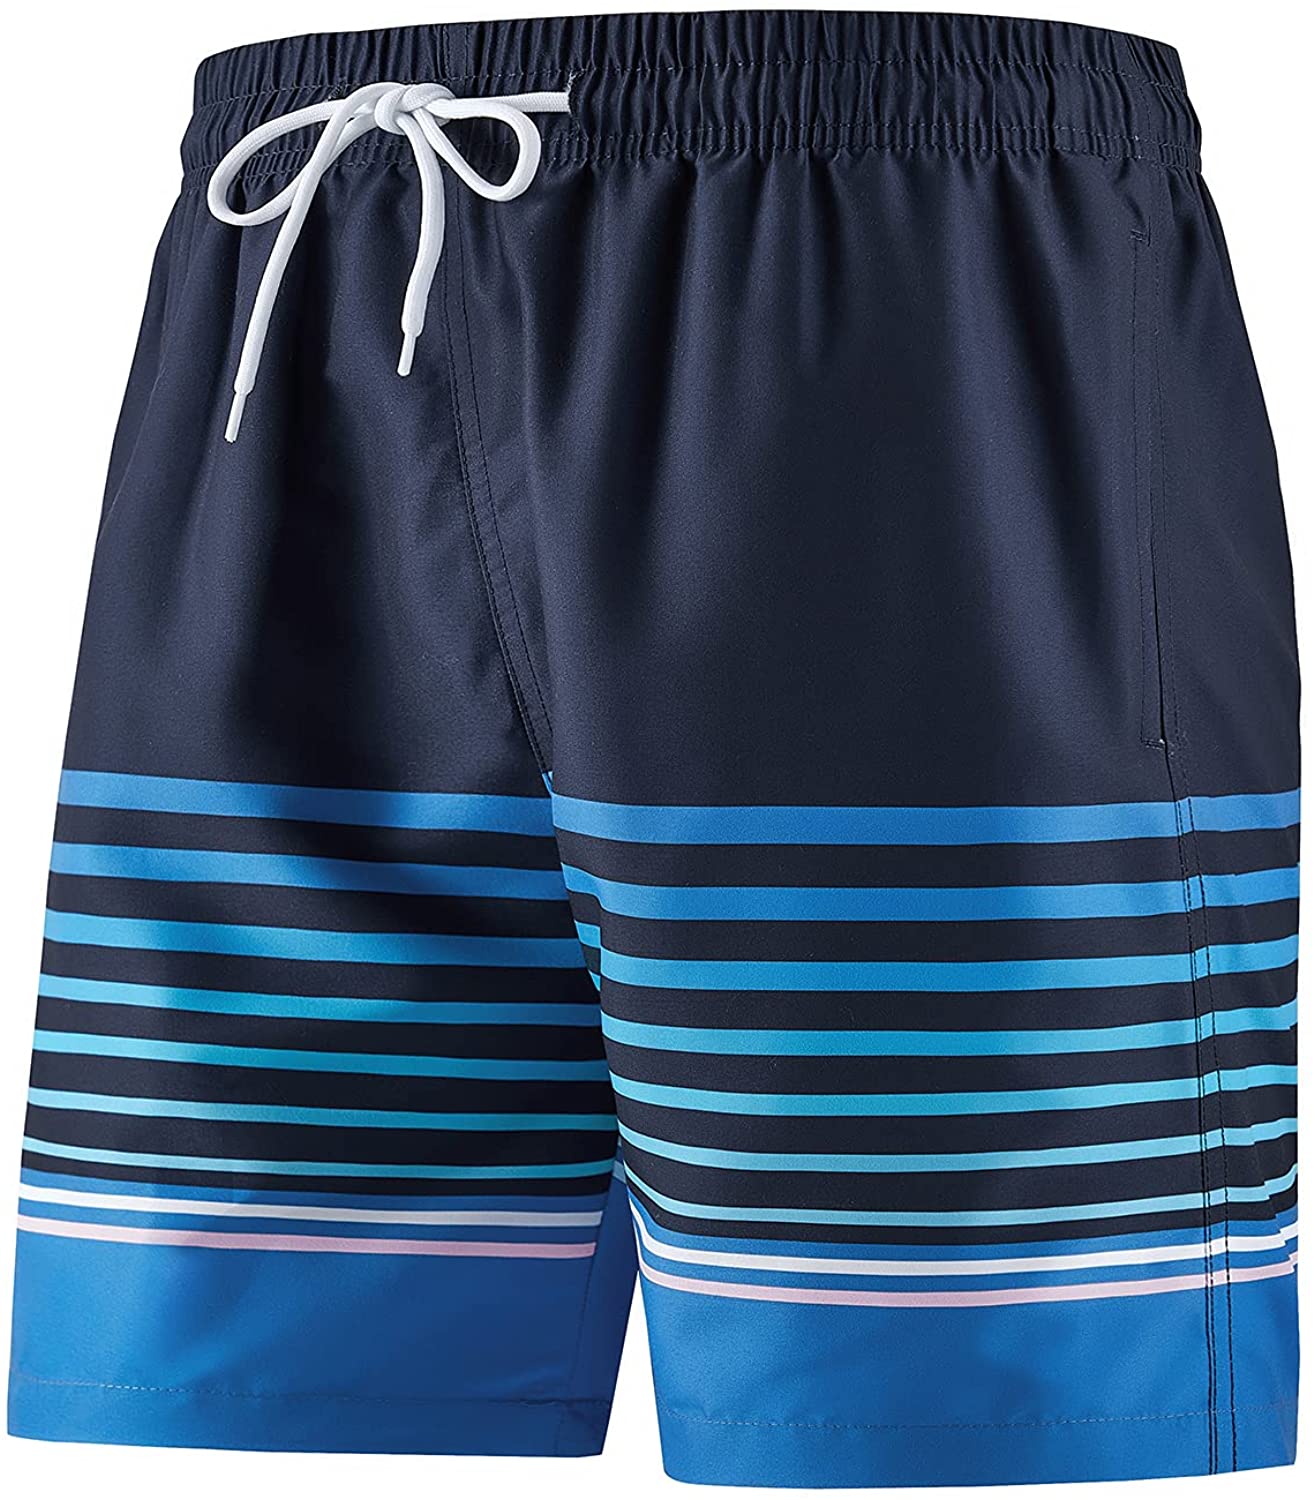 HOTSKON Mens Swim Trunks Beach Shorts with Mesh Lining Swimwear Bathing Suits 